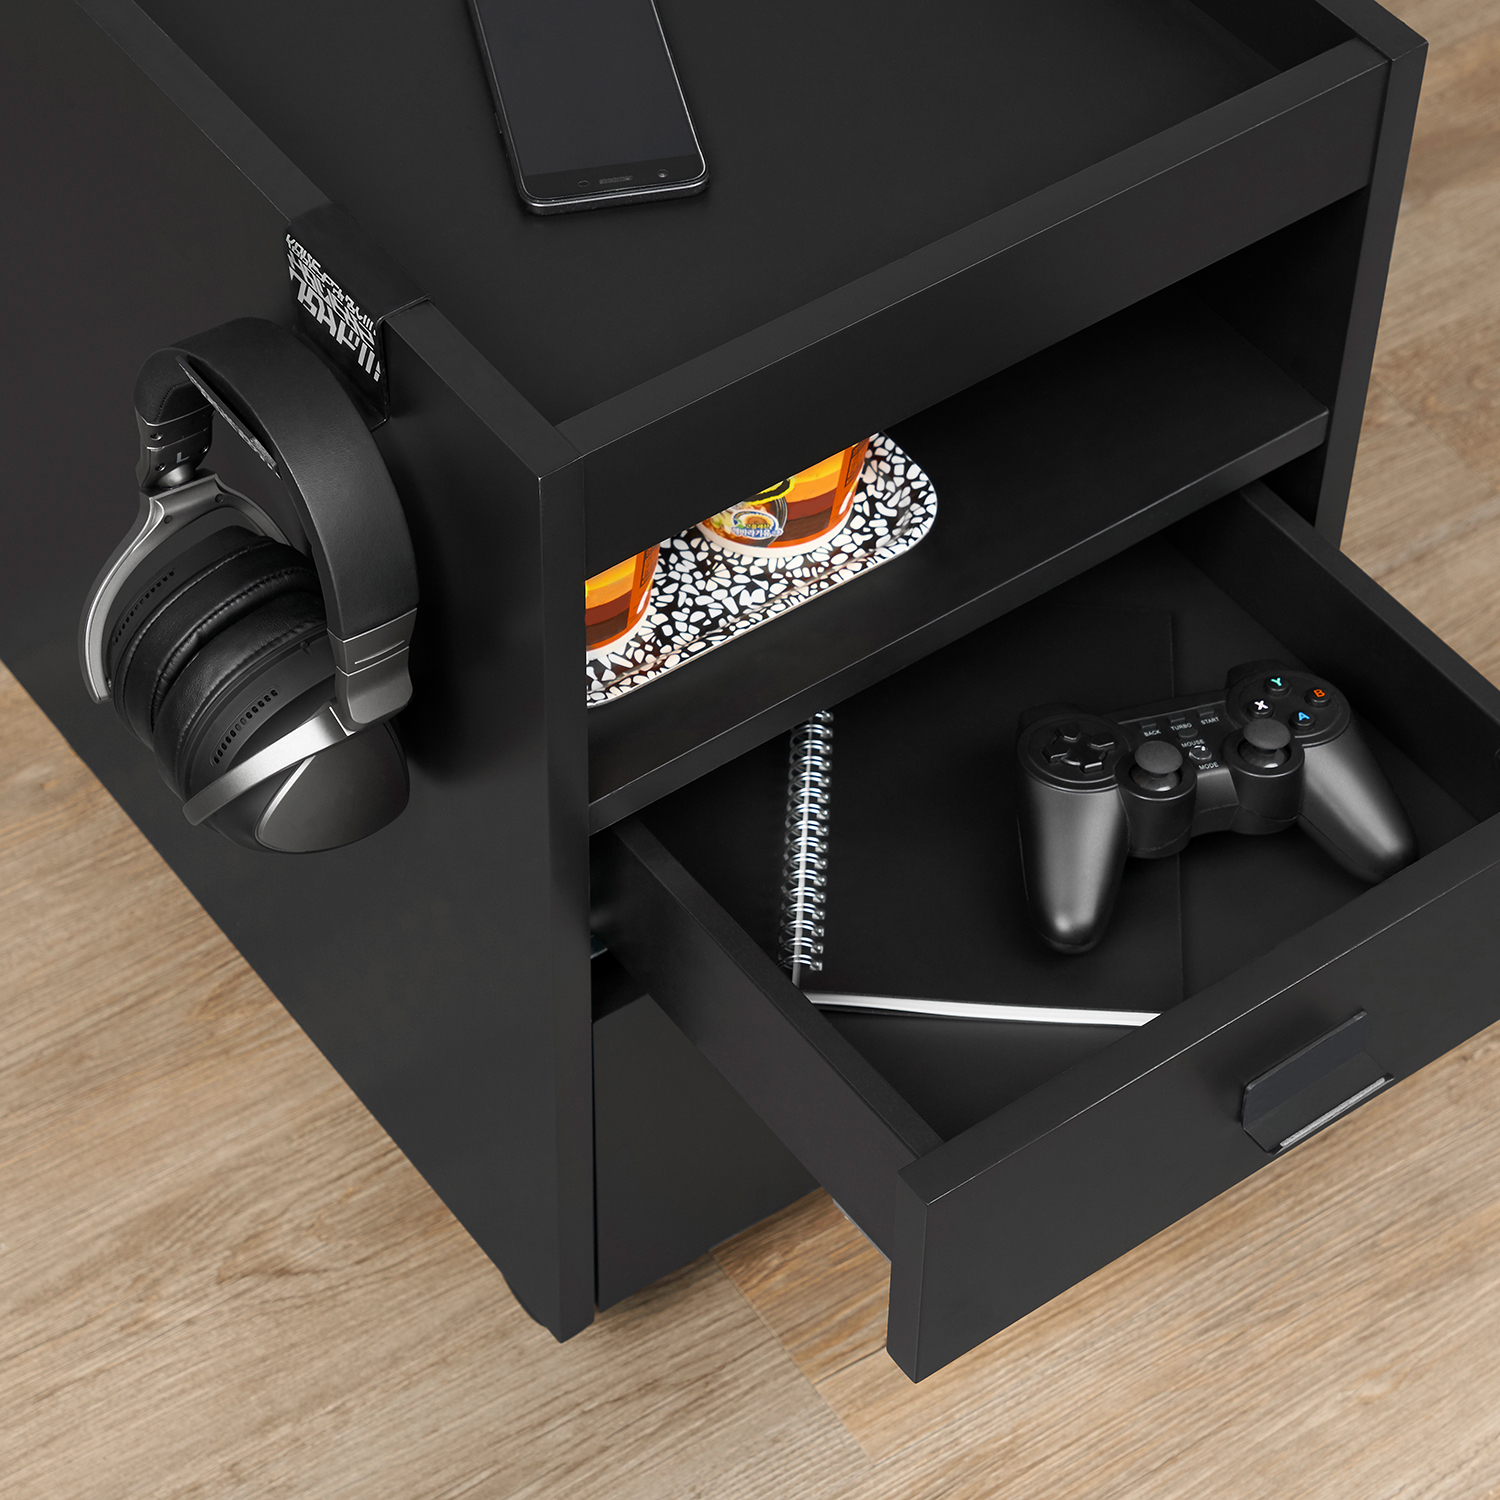 IKEA Introduces New Gaming Furniture Range